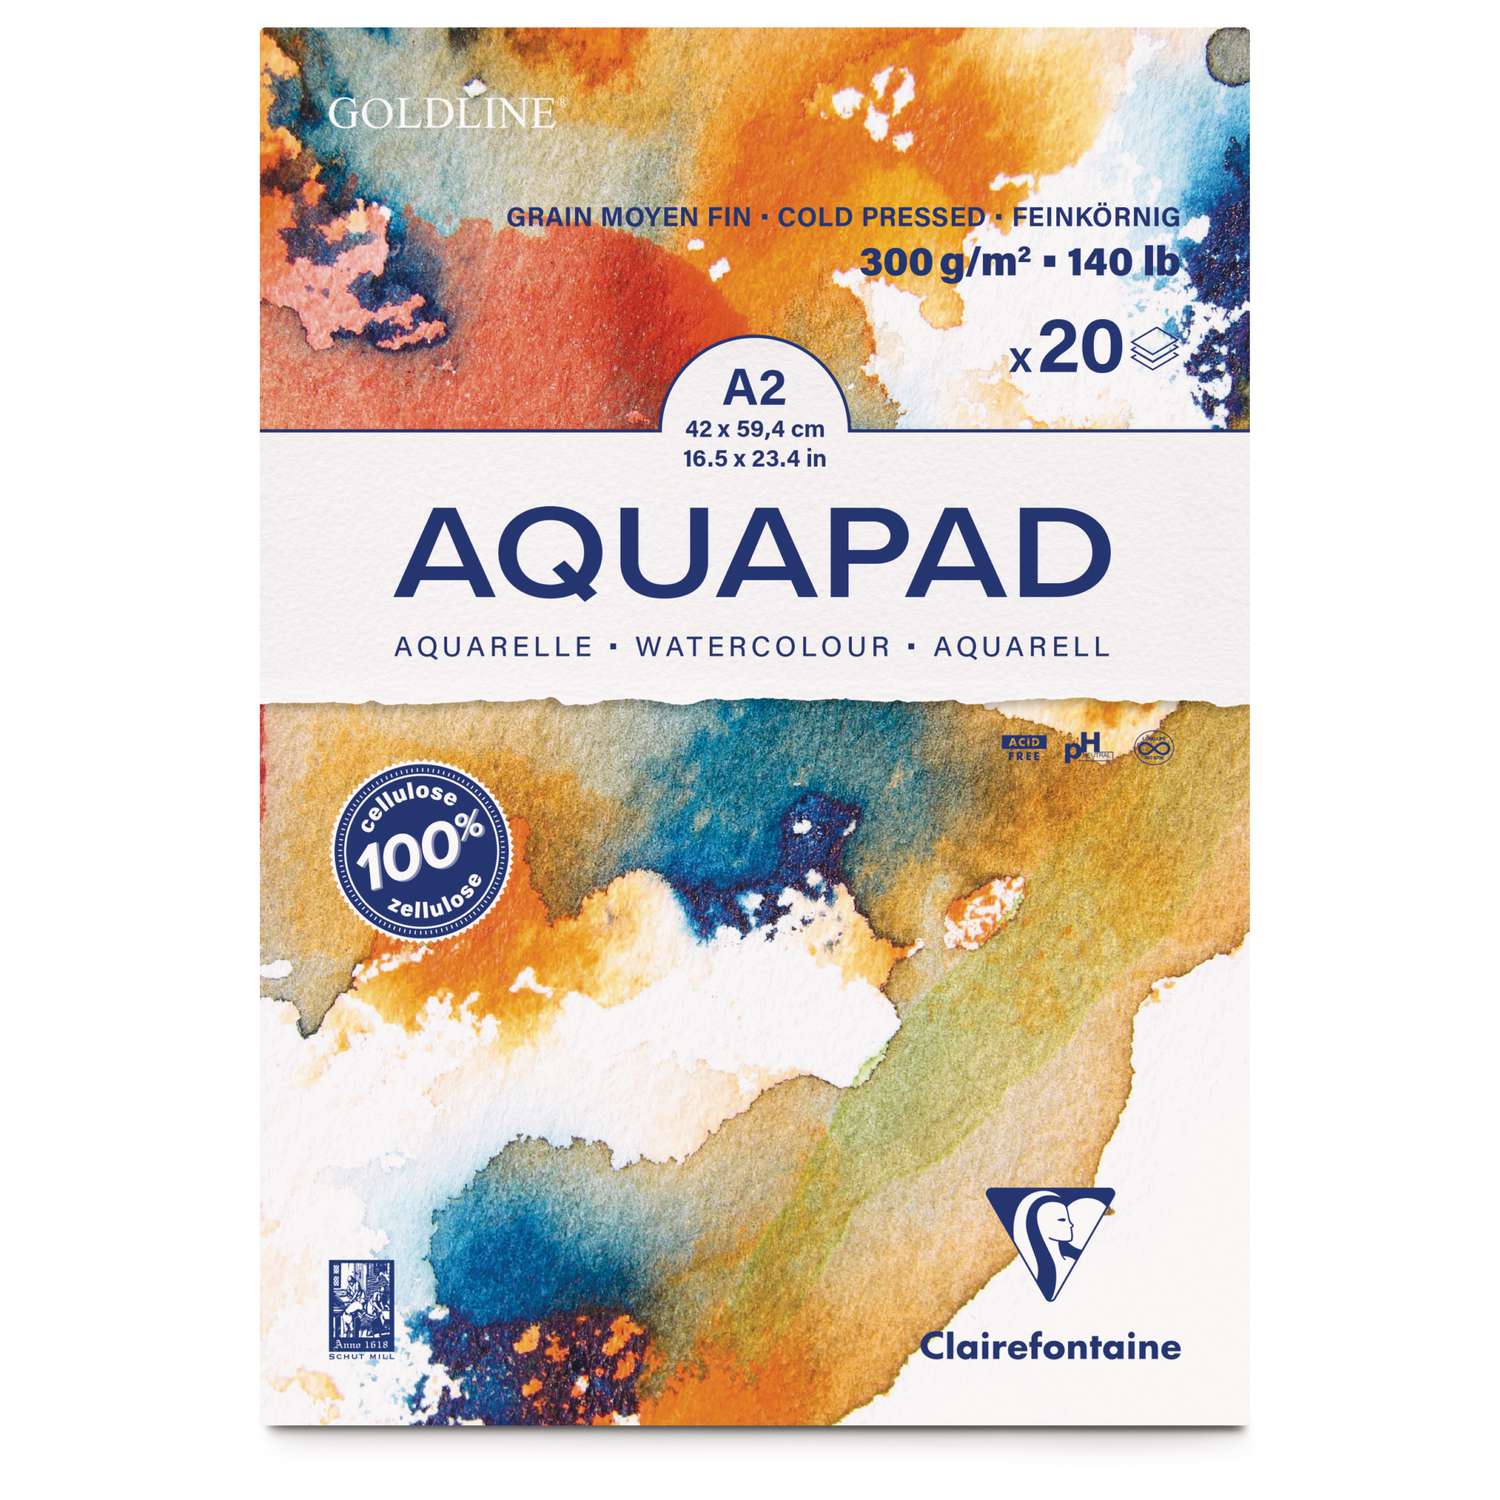 Clairefontaine Aquapad Glued Watercolour Pad - A2 - 20 sheets